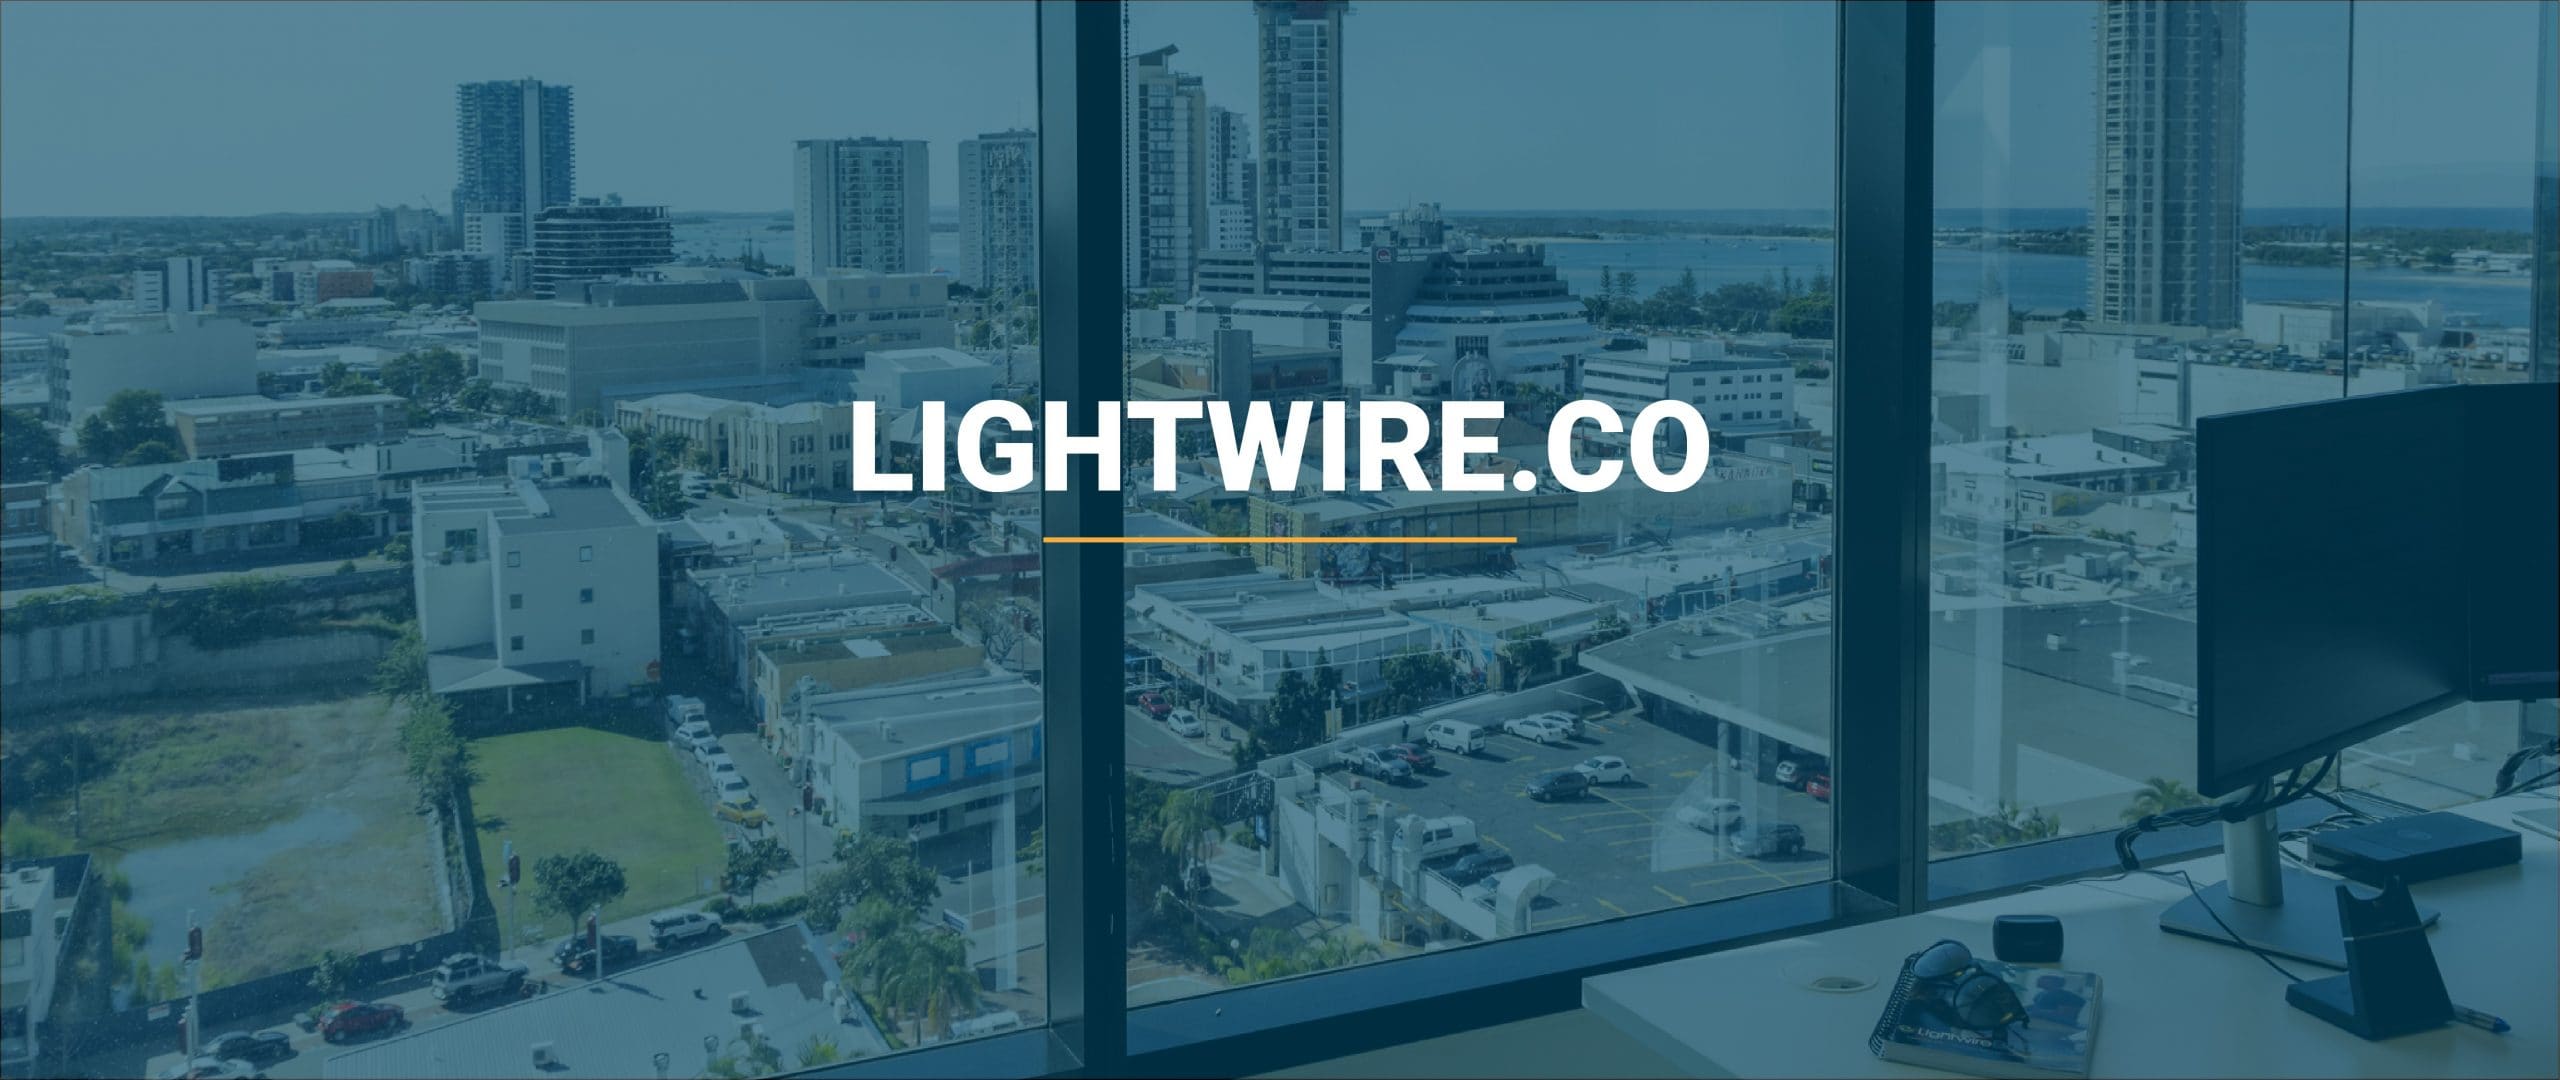 lightwireco blog cover